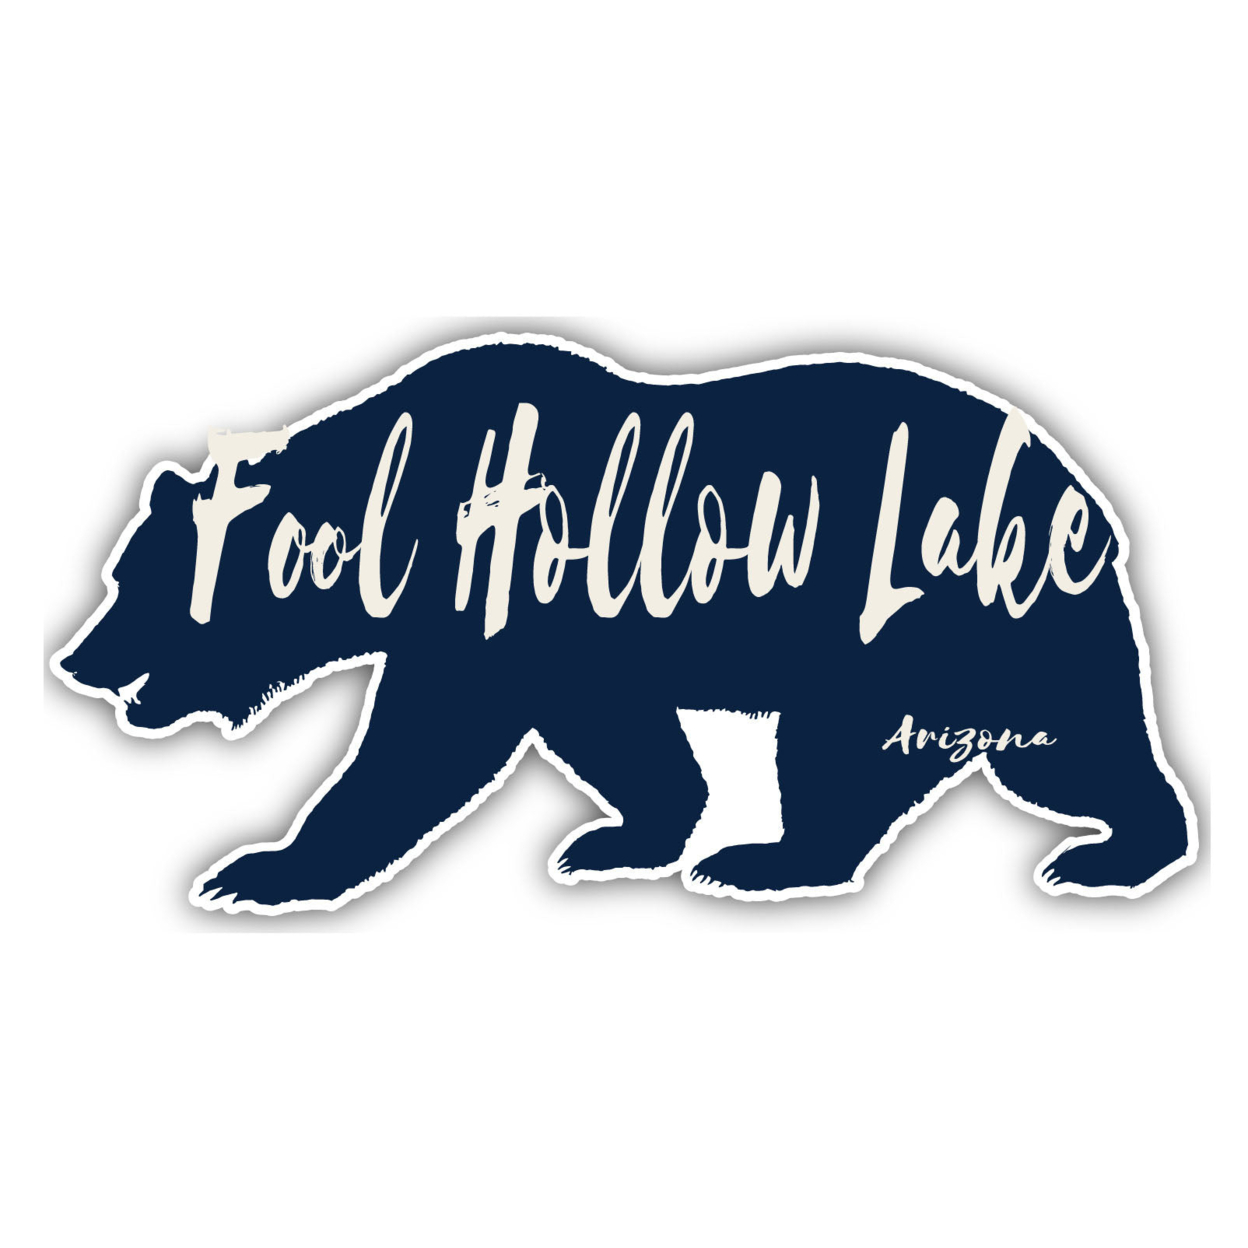 Fool Hollow Lake Arizona Souvenir Decorative Stickers (Choose Theme And Size) - 4-Pack, 2-Inch, Bear